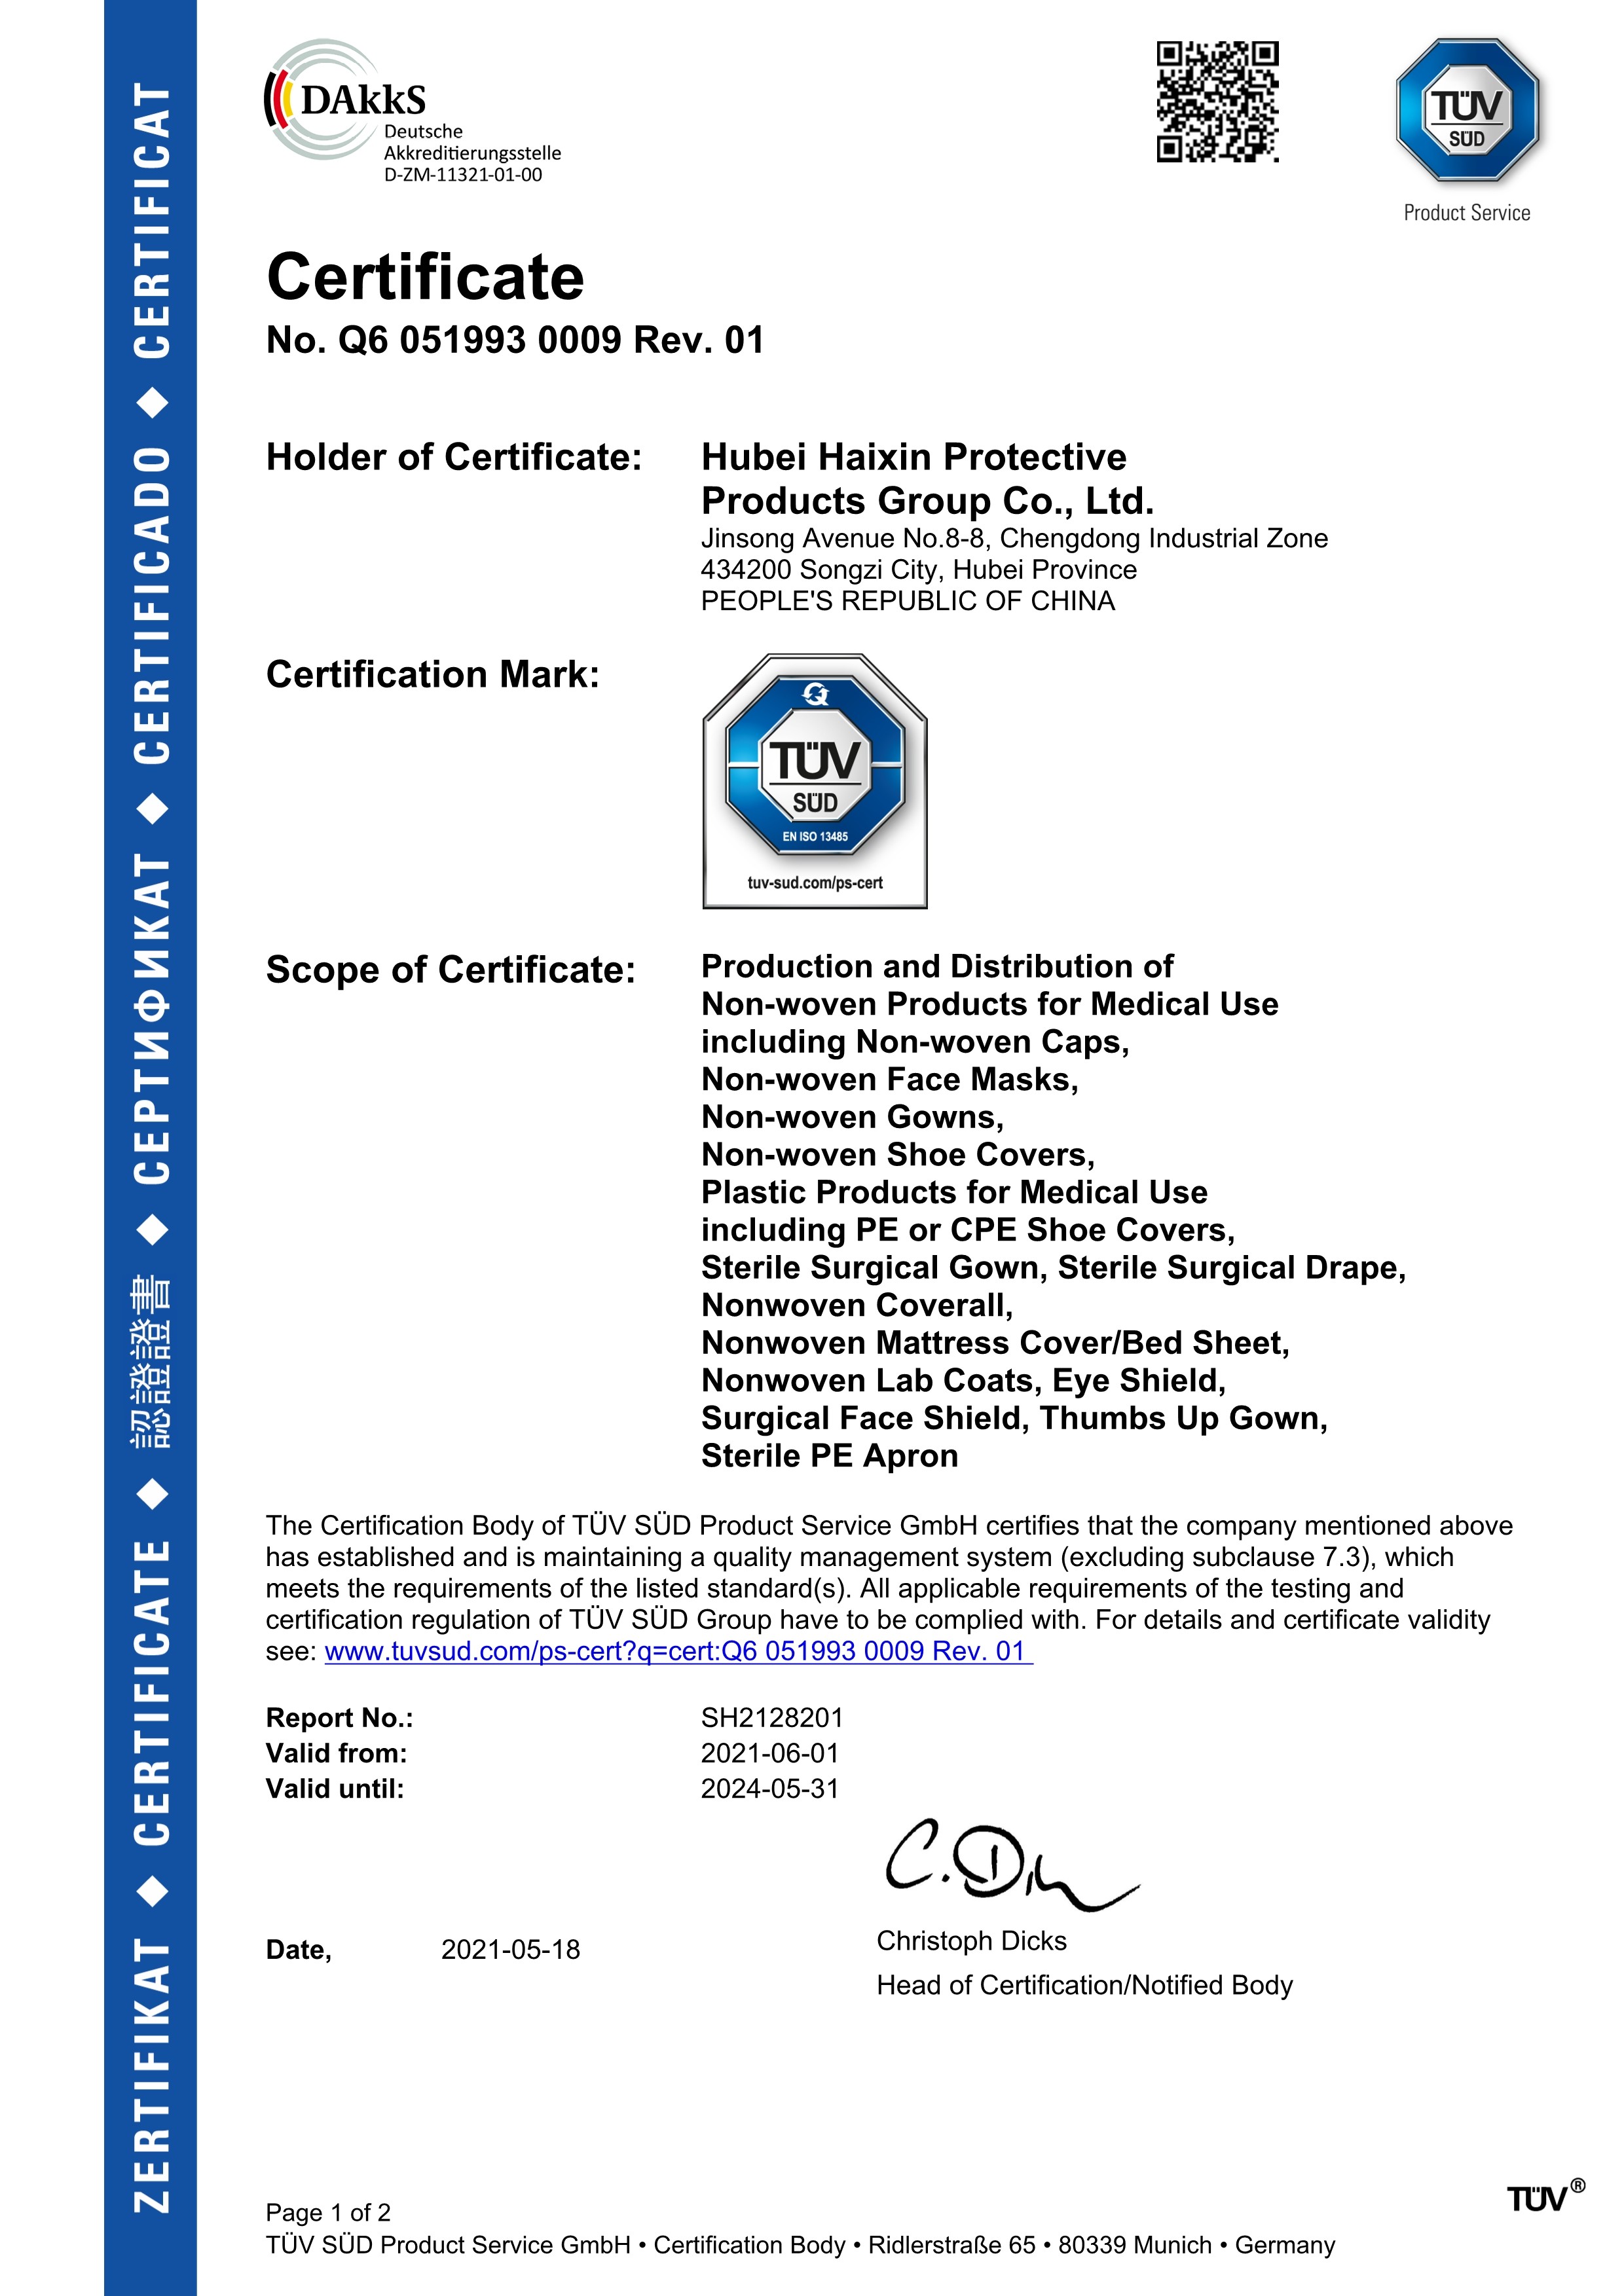 JINGZHOU HAIXIN GREEN CROSS MEDICAL PRODUCTS CO.,LTD. Certifications